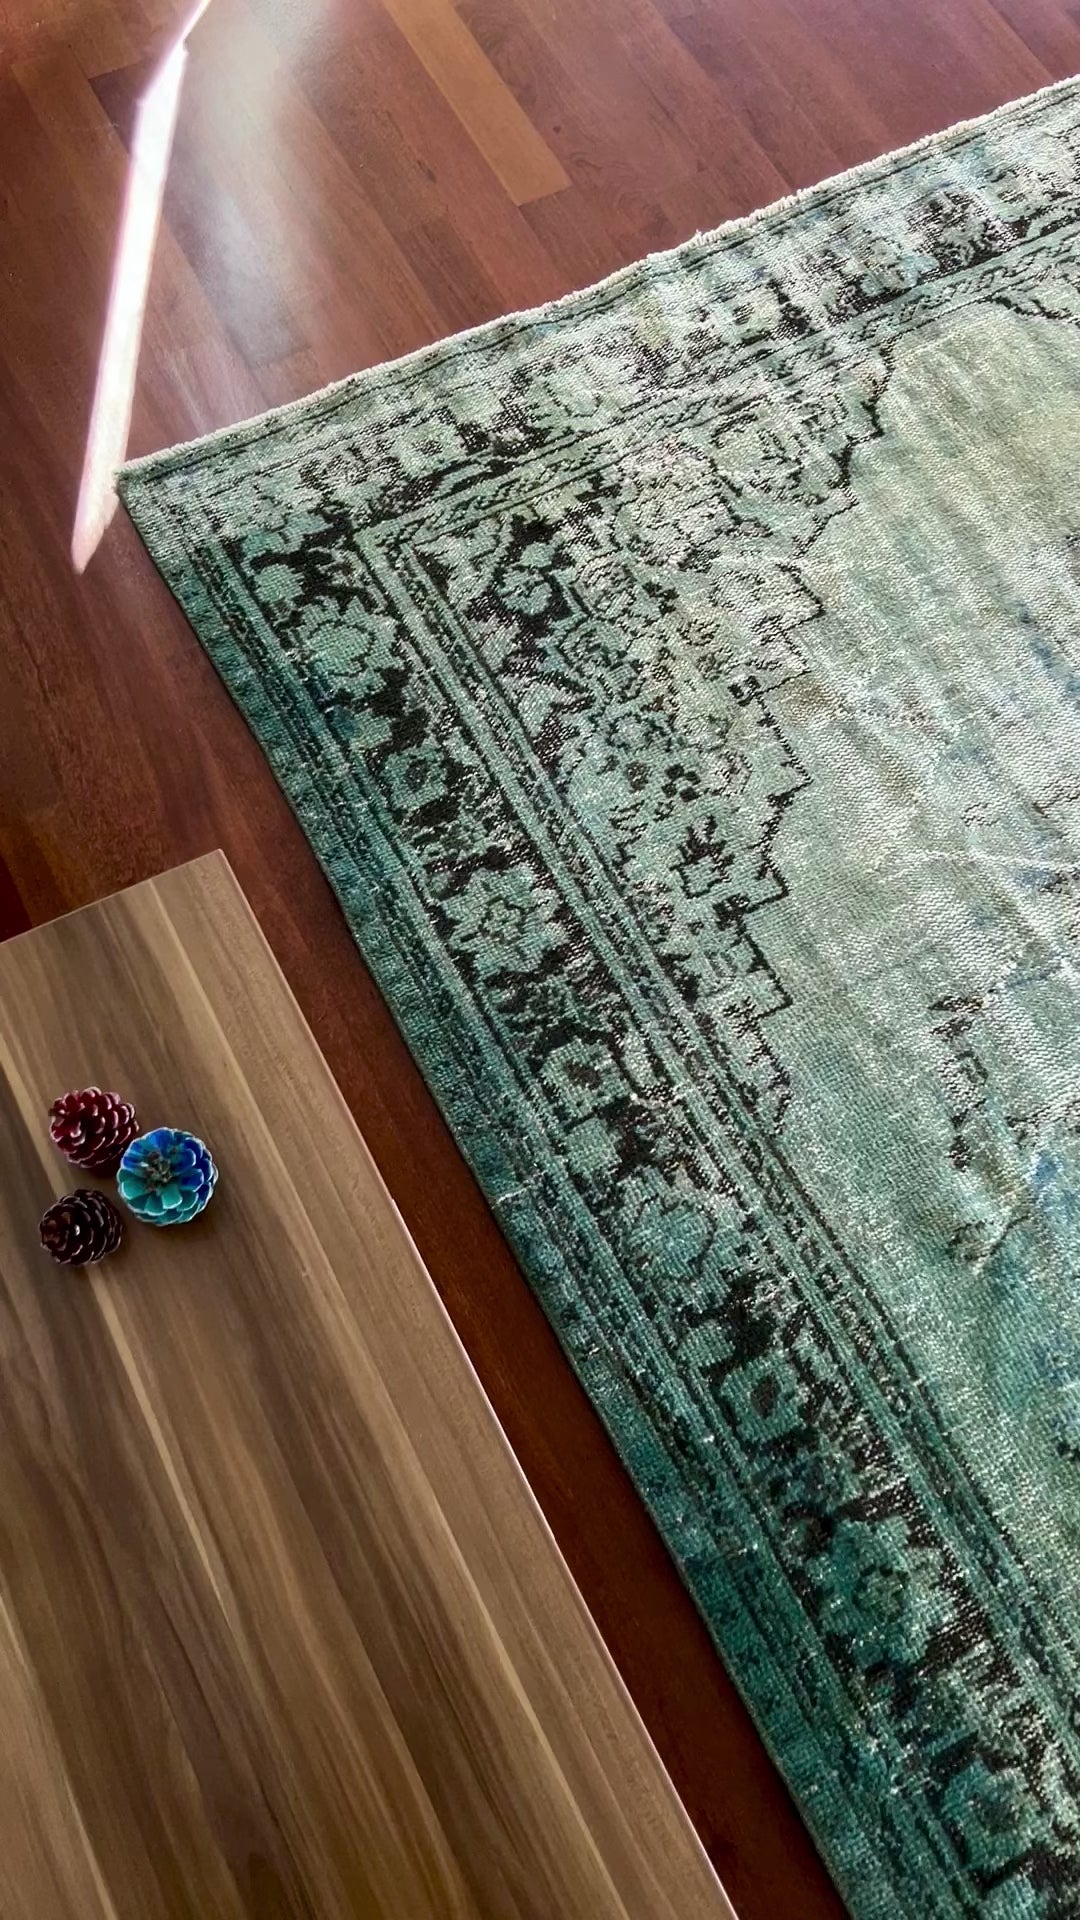 Green disstressed anatolian rug san francisco bay area vintage rug palo alto oriental rug berkeley buy handmade rug online california canada toronto